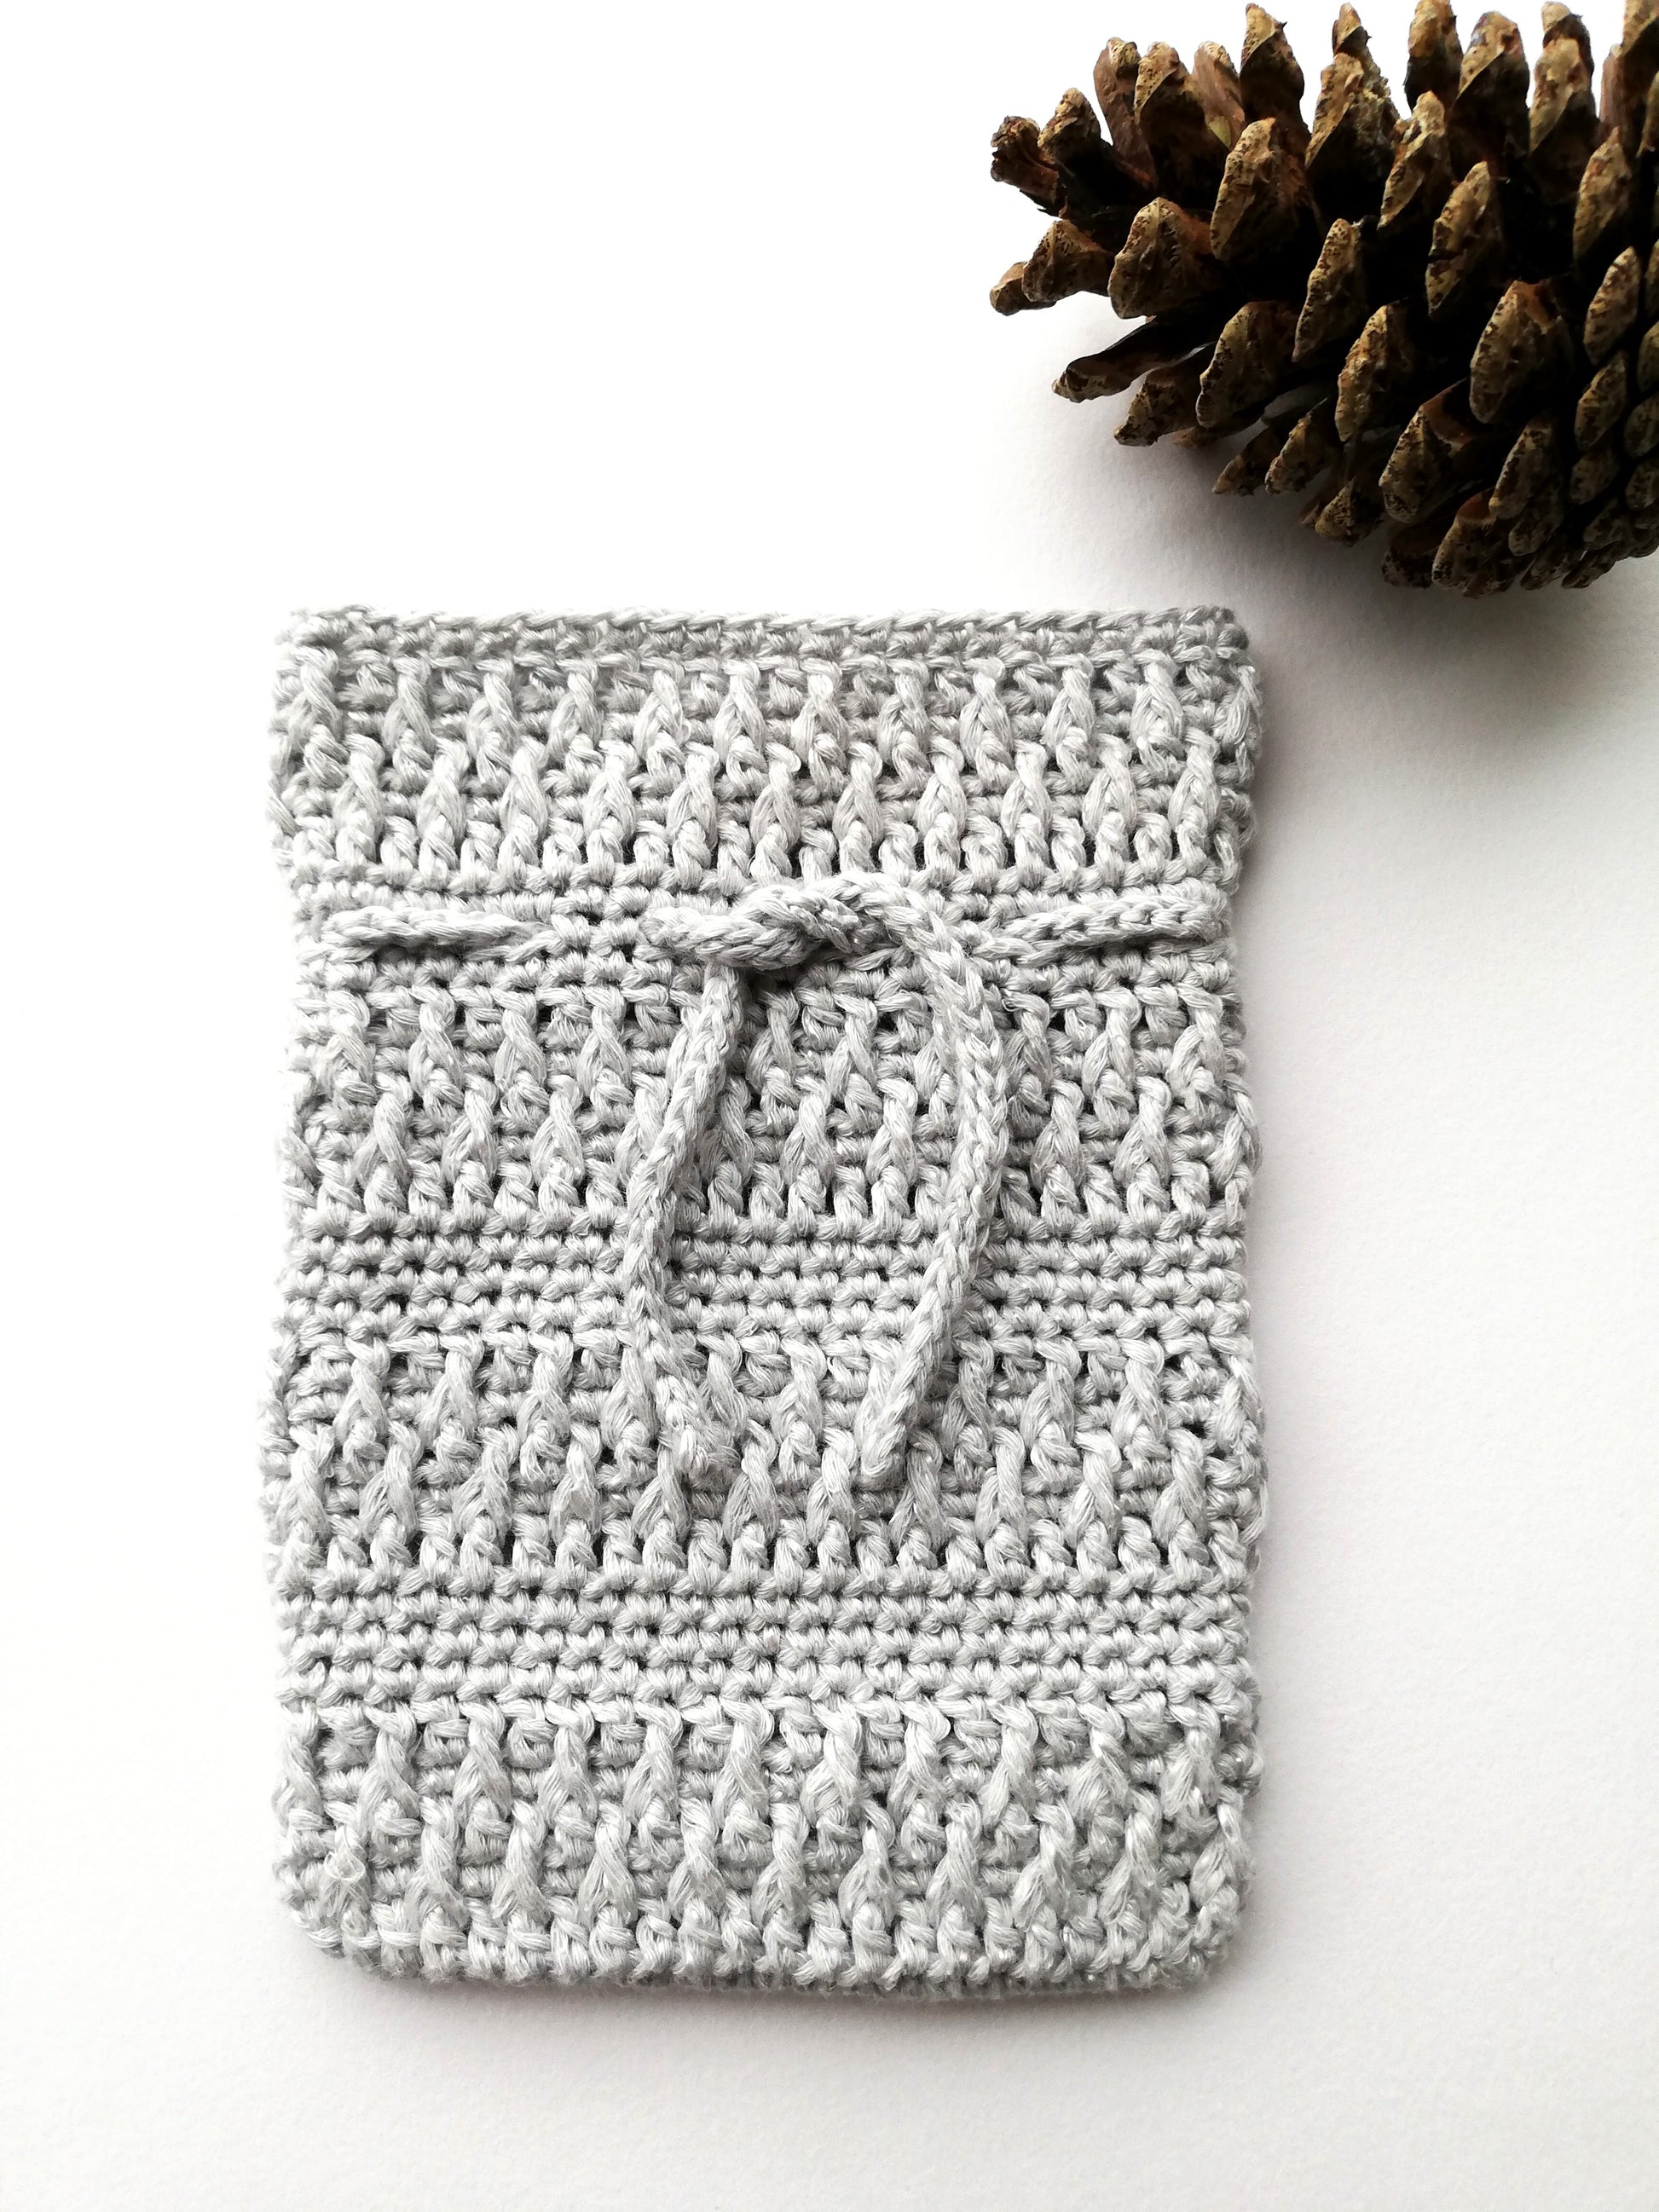 Crochet pattern: small alpine stitch bag